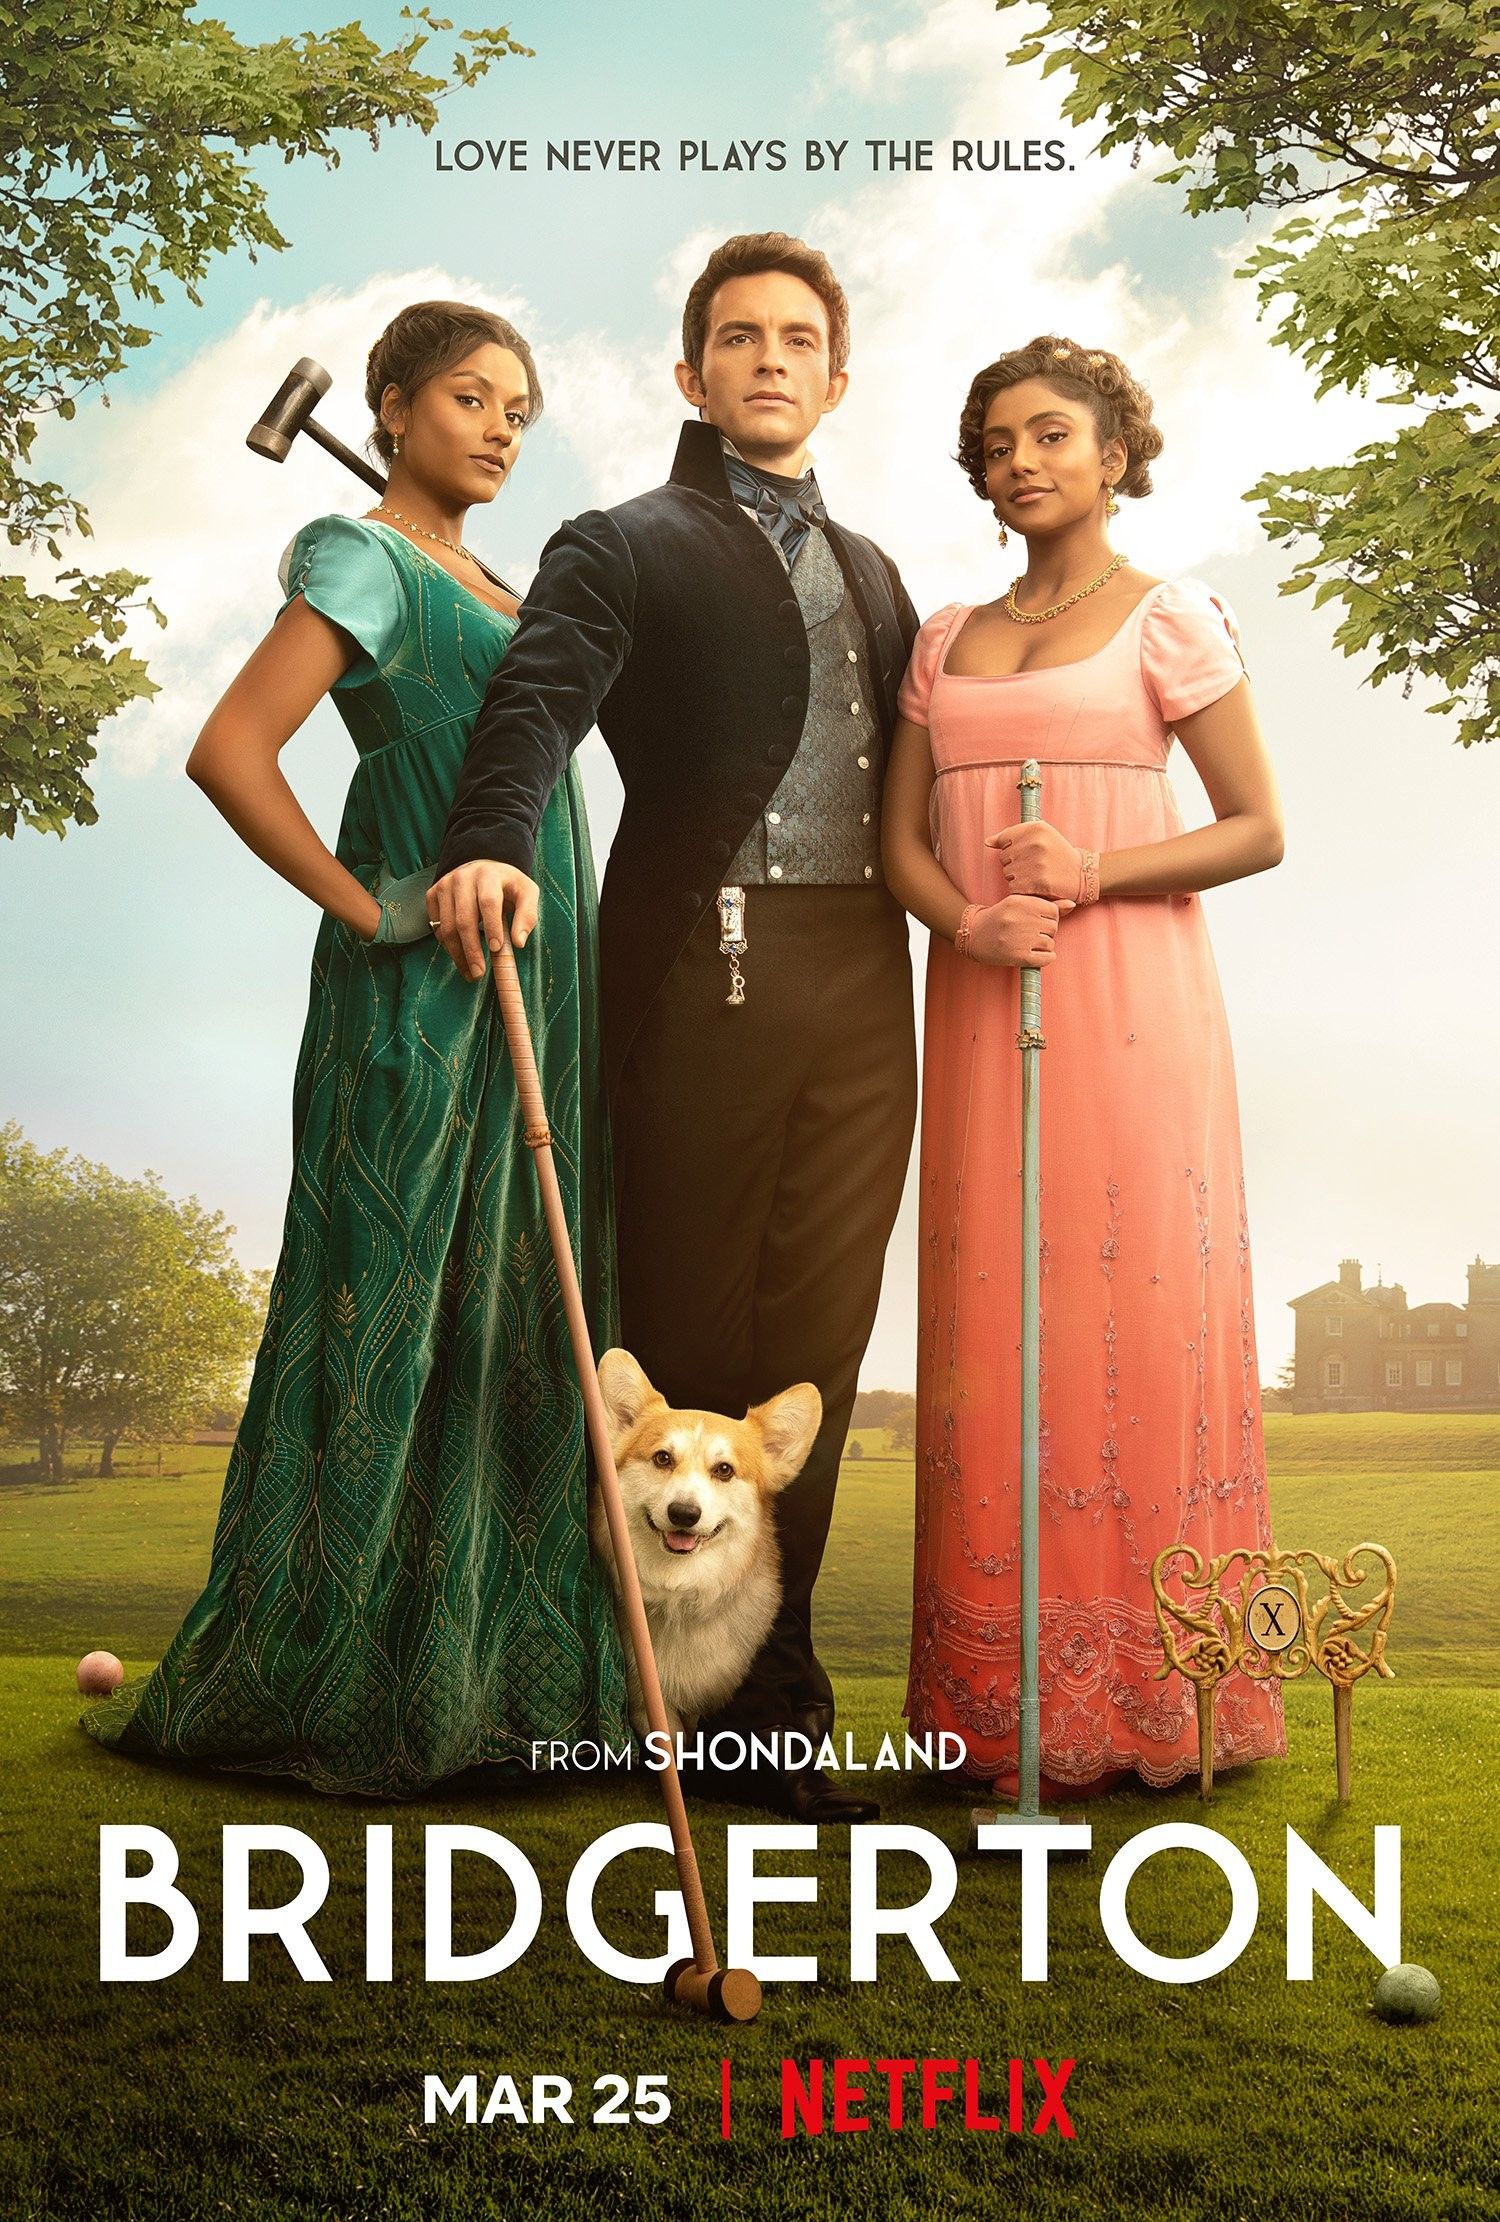 bridgerton-season-2-posters-show-11-new-returning-characters